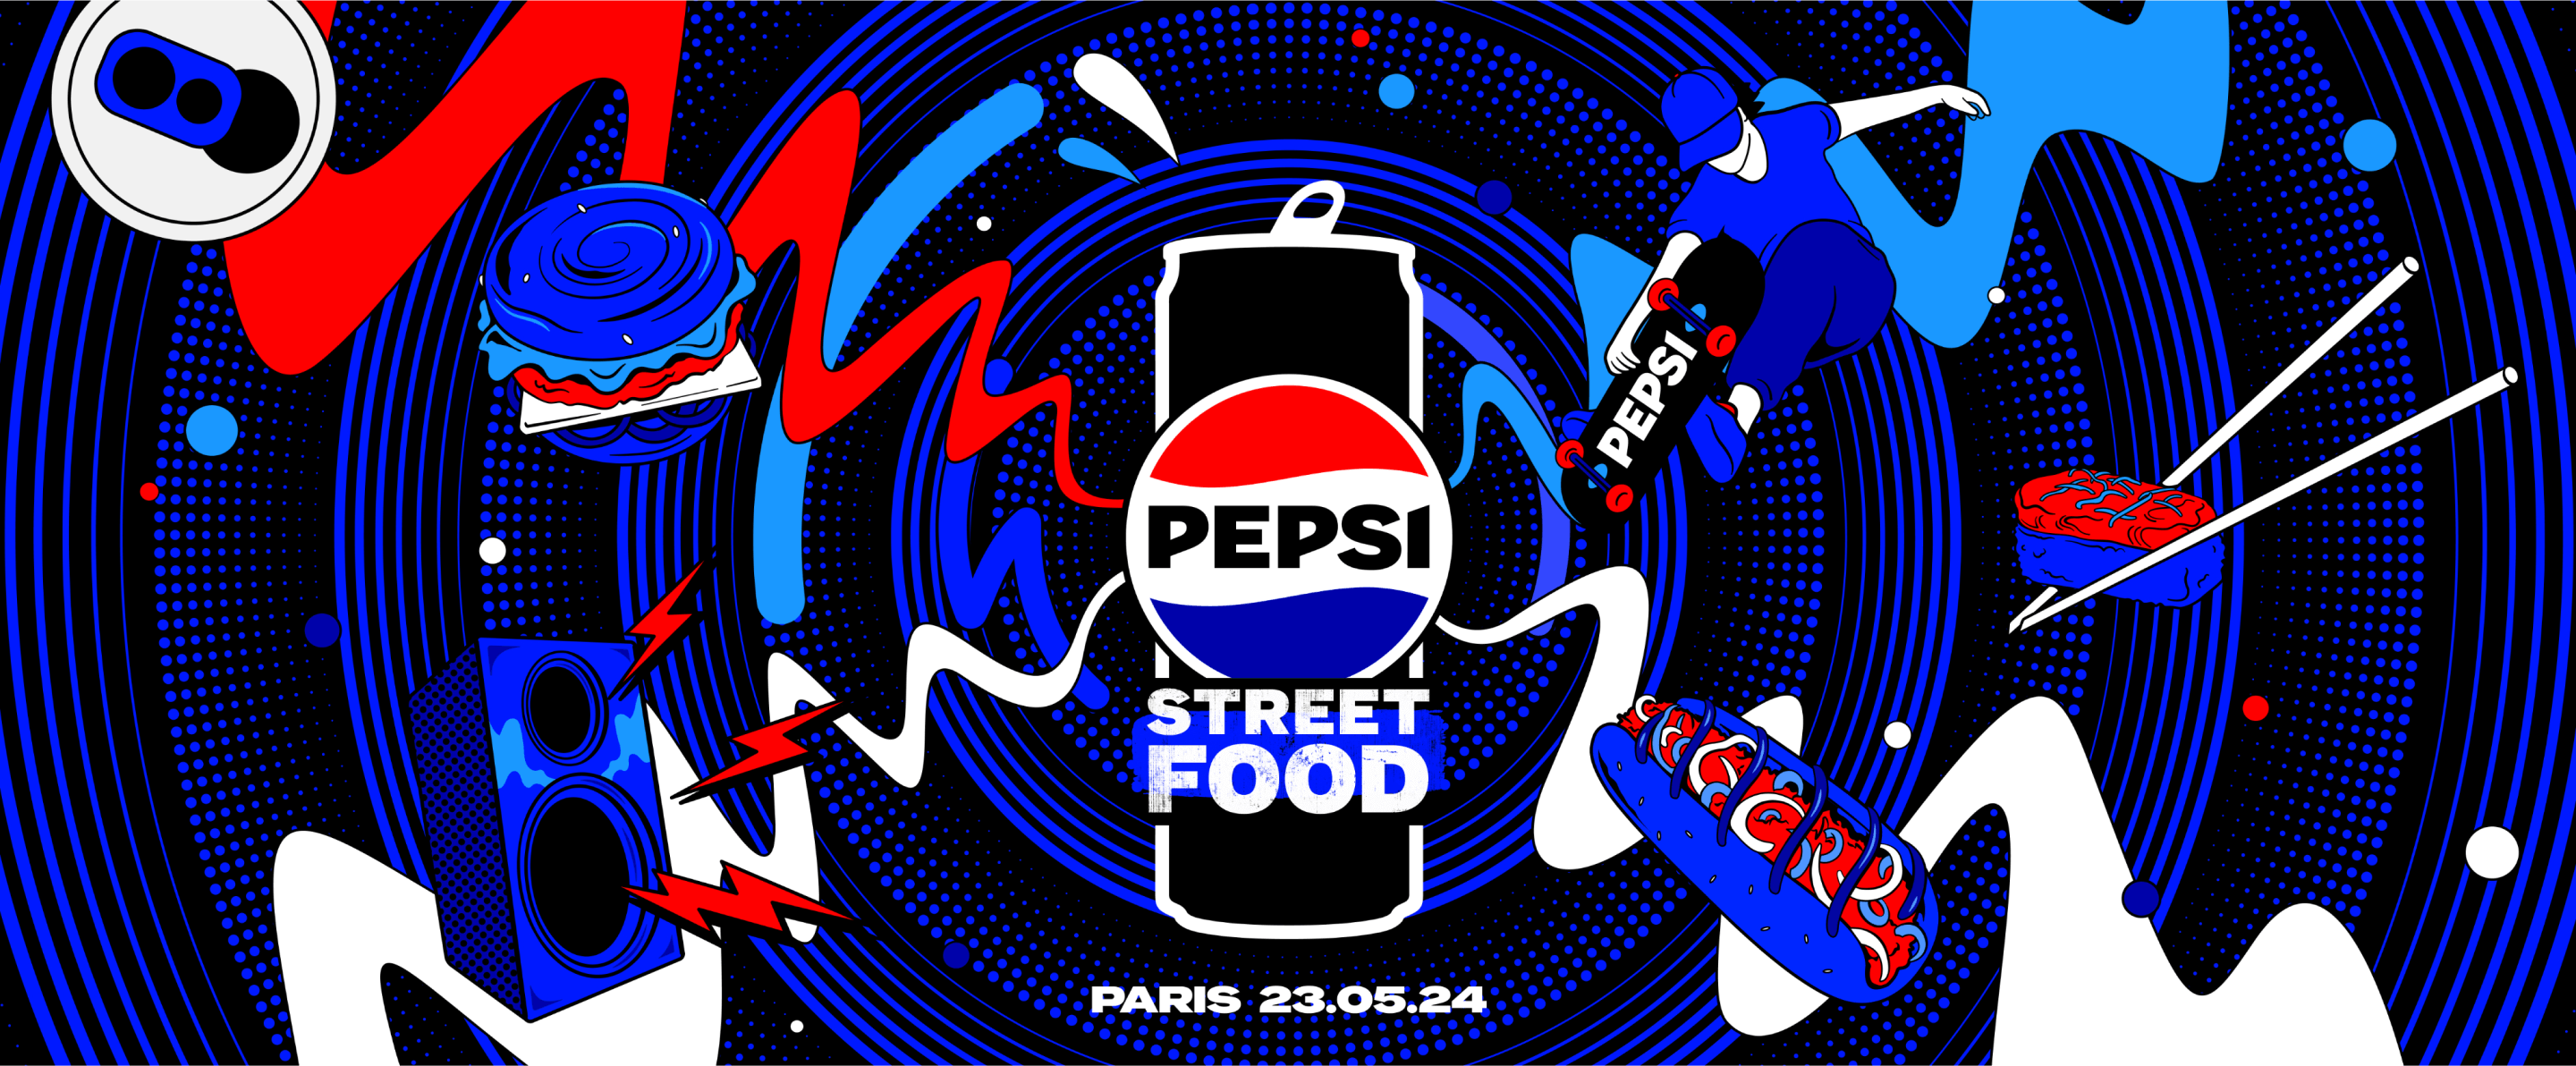 Pepsi Street Food, Paris 23.05.24